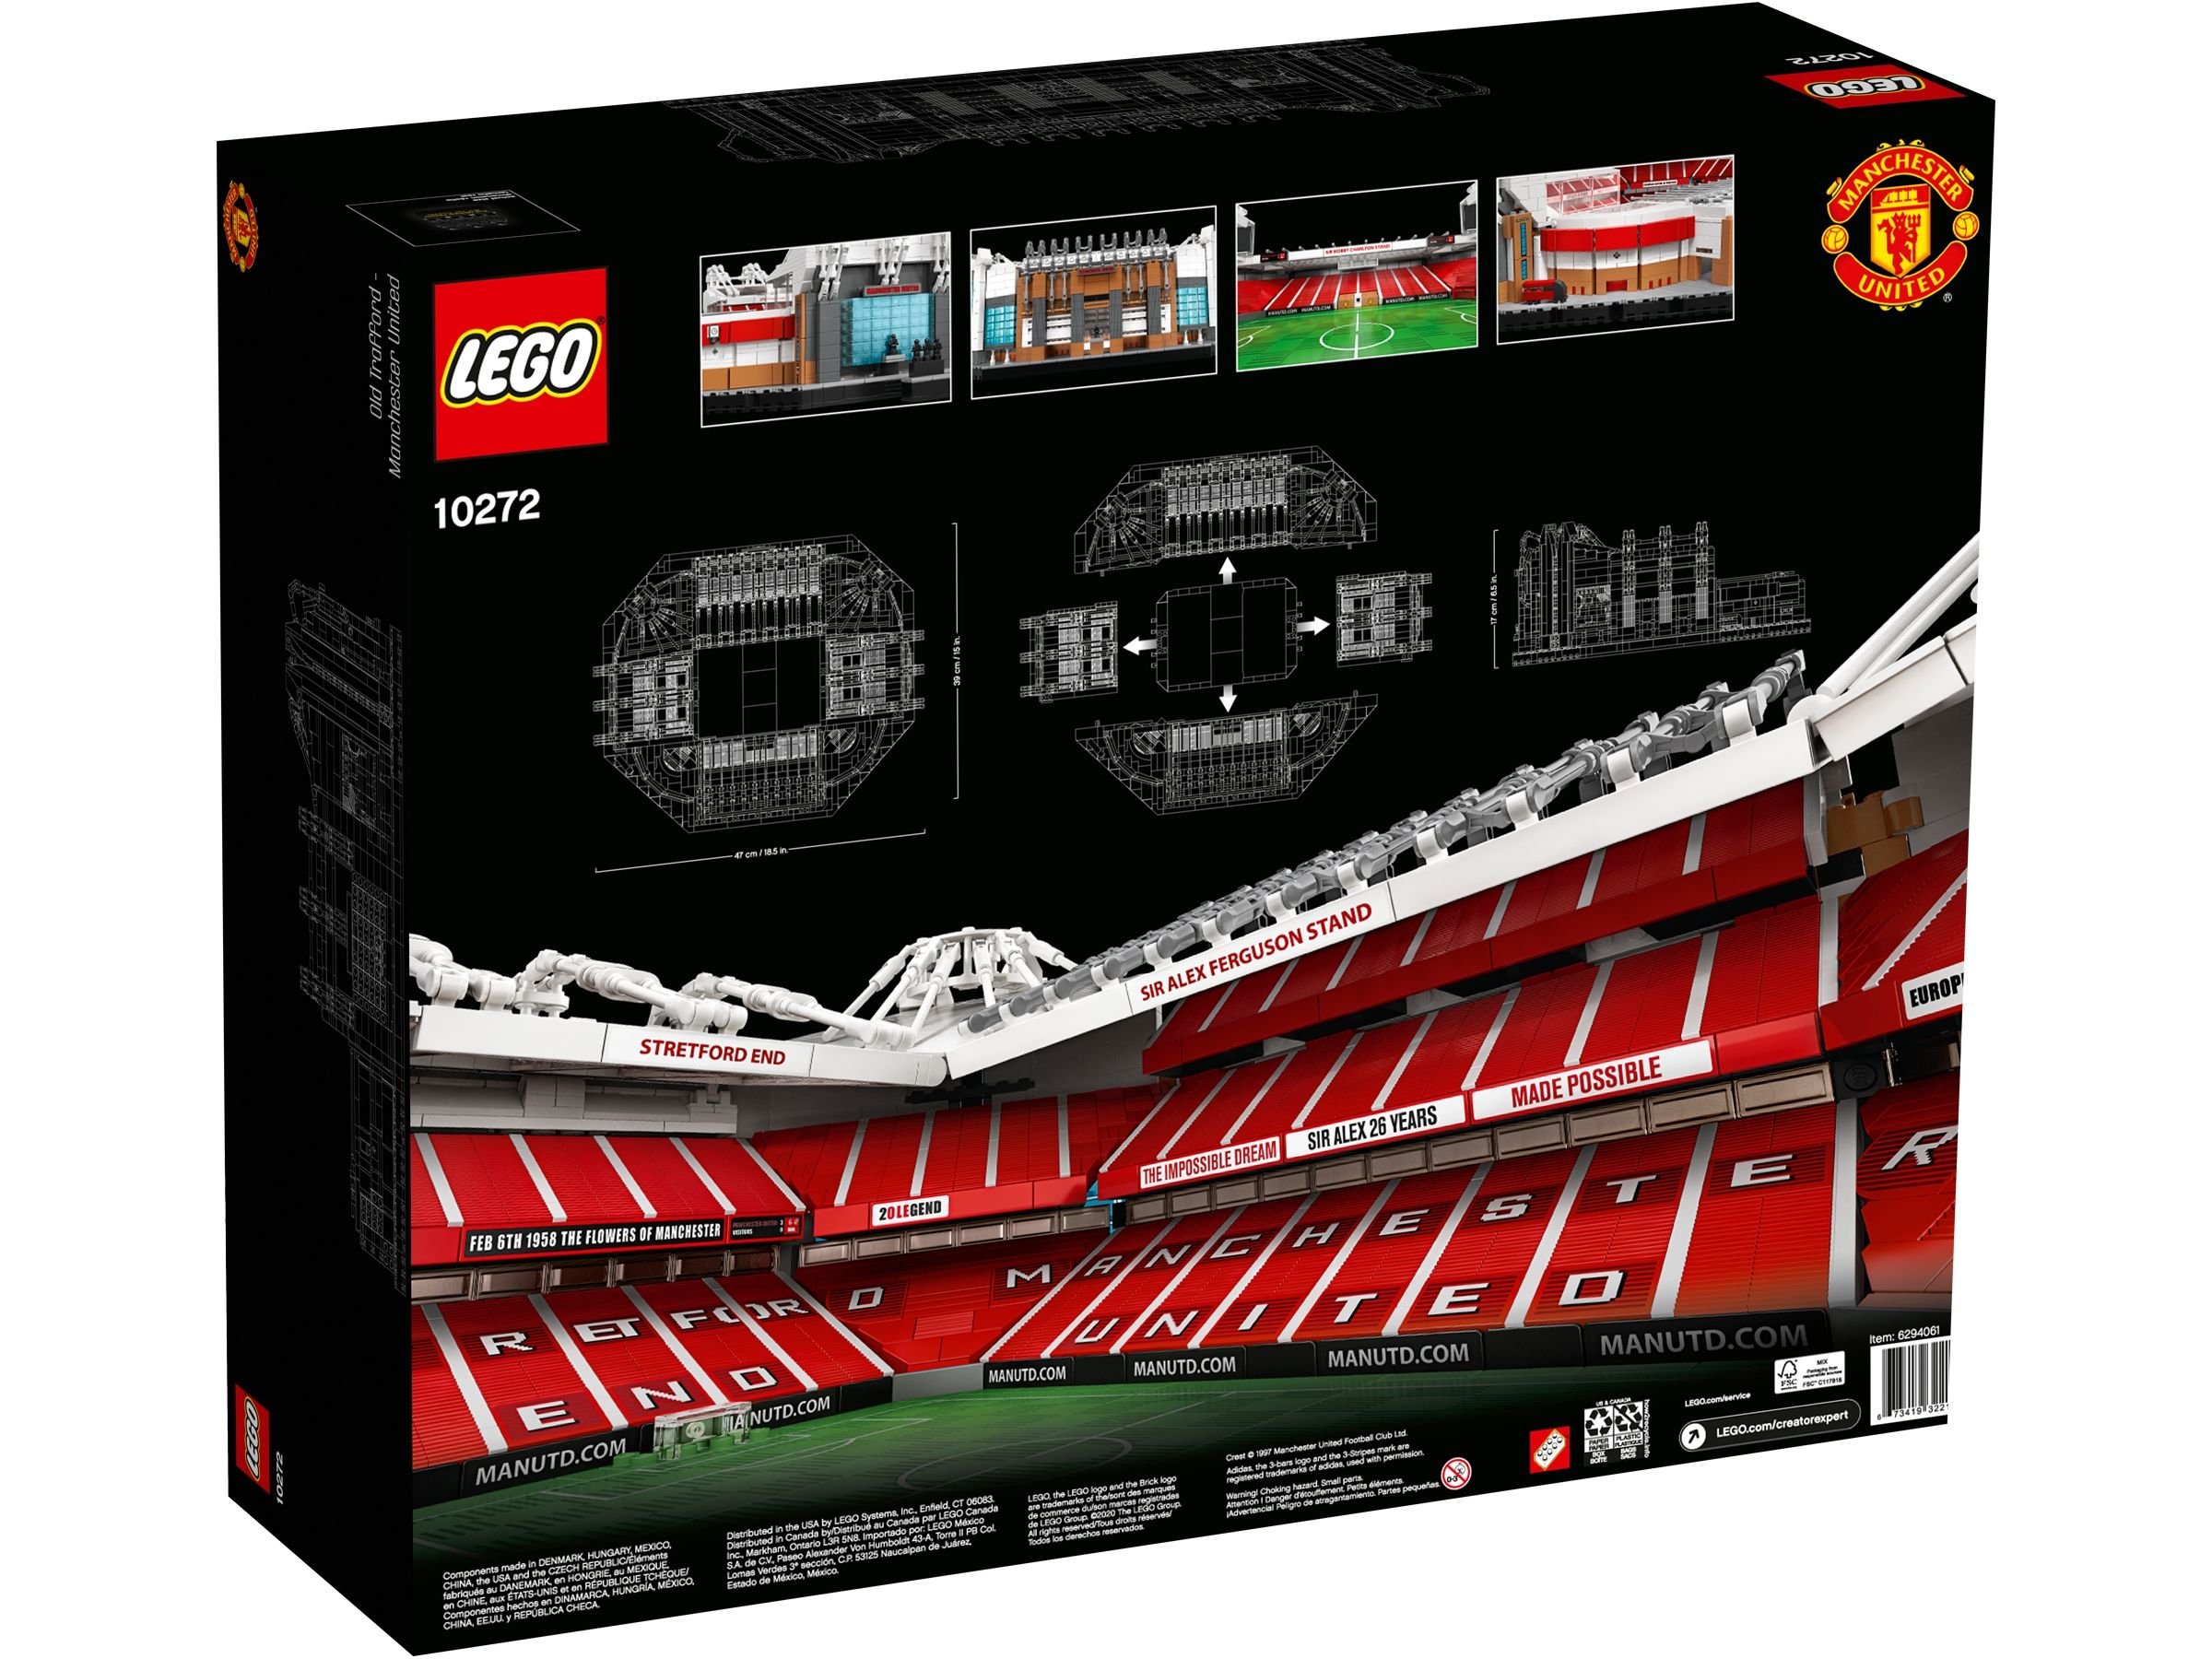 LEGO Advanced Models 10272 Old Trafford - Manchester United LEGO_10272_Box5_v39_2400.jpg